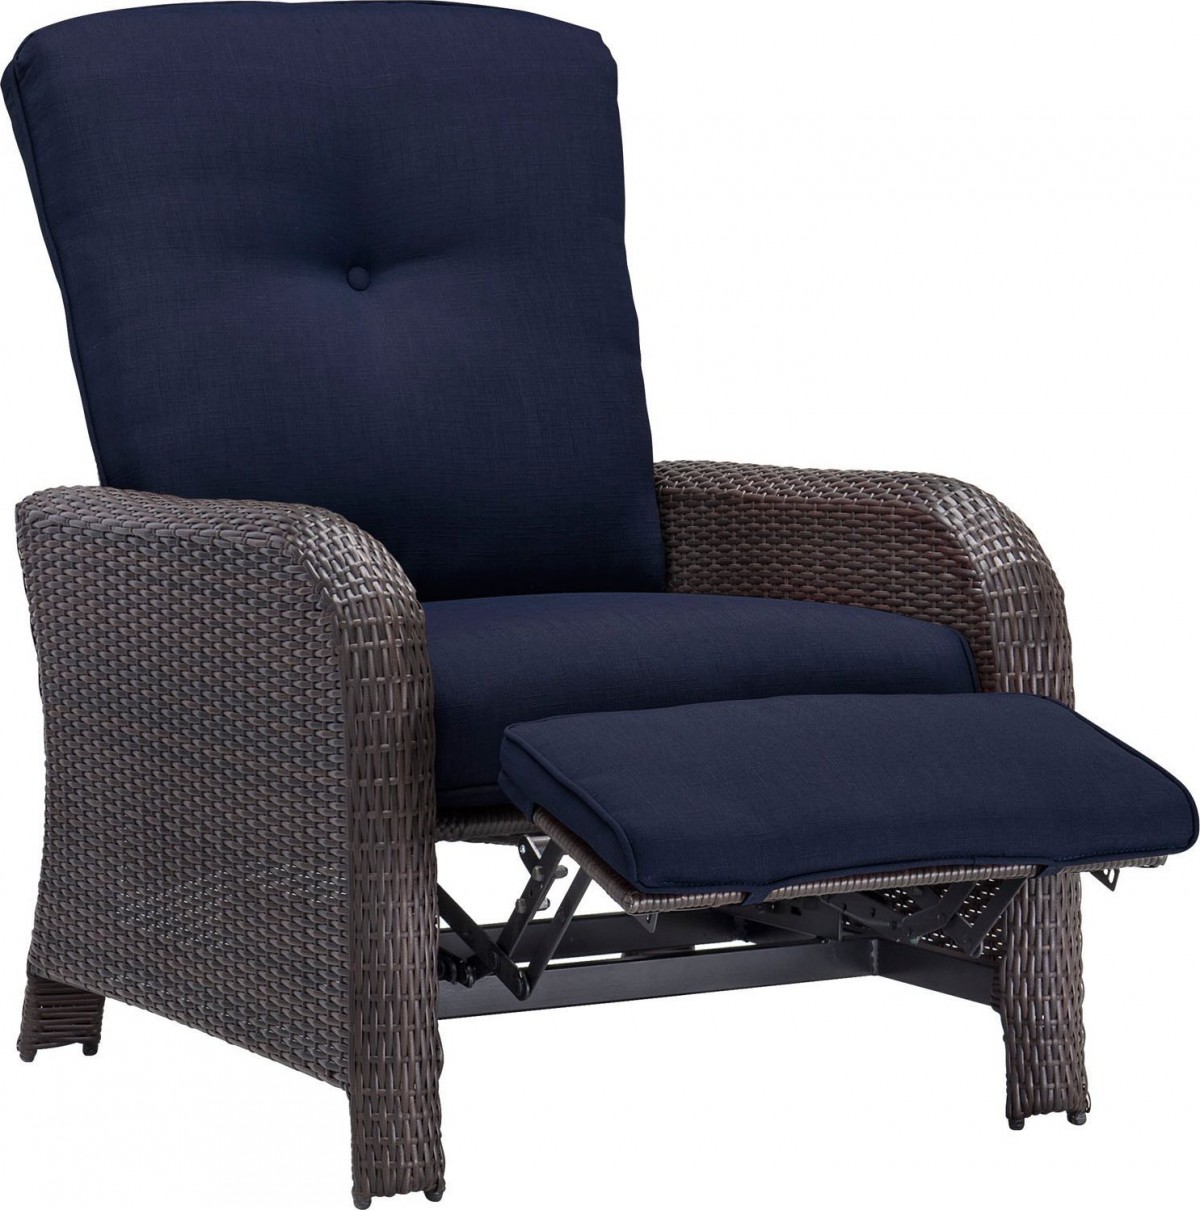 Hanover Strathmere Luxury Wicker Outdoor Recliner Chair